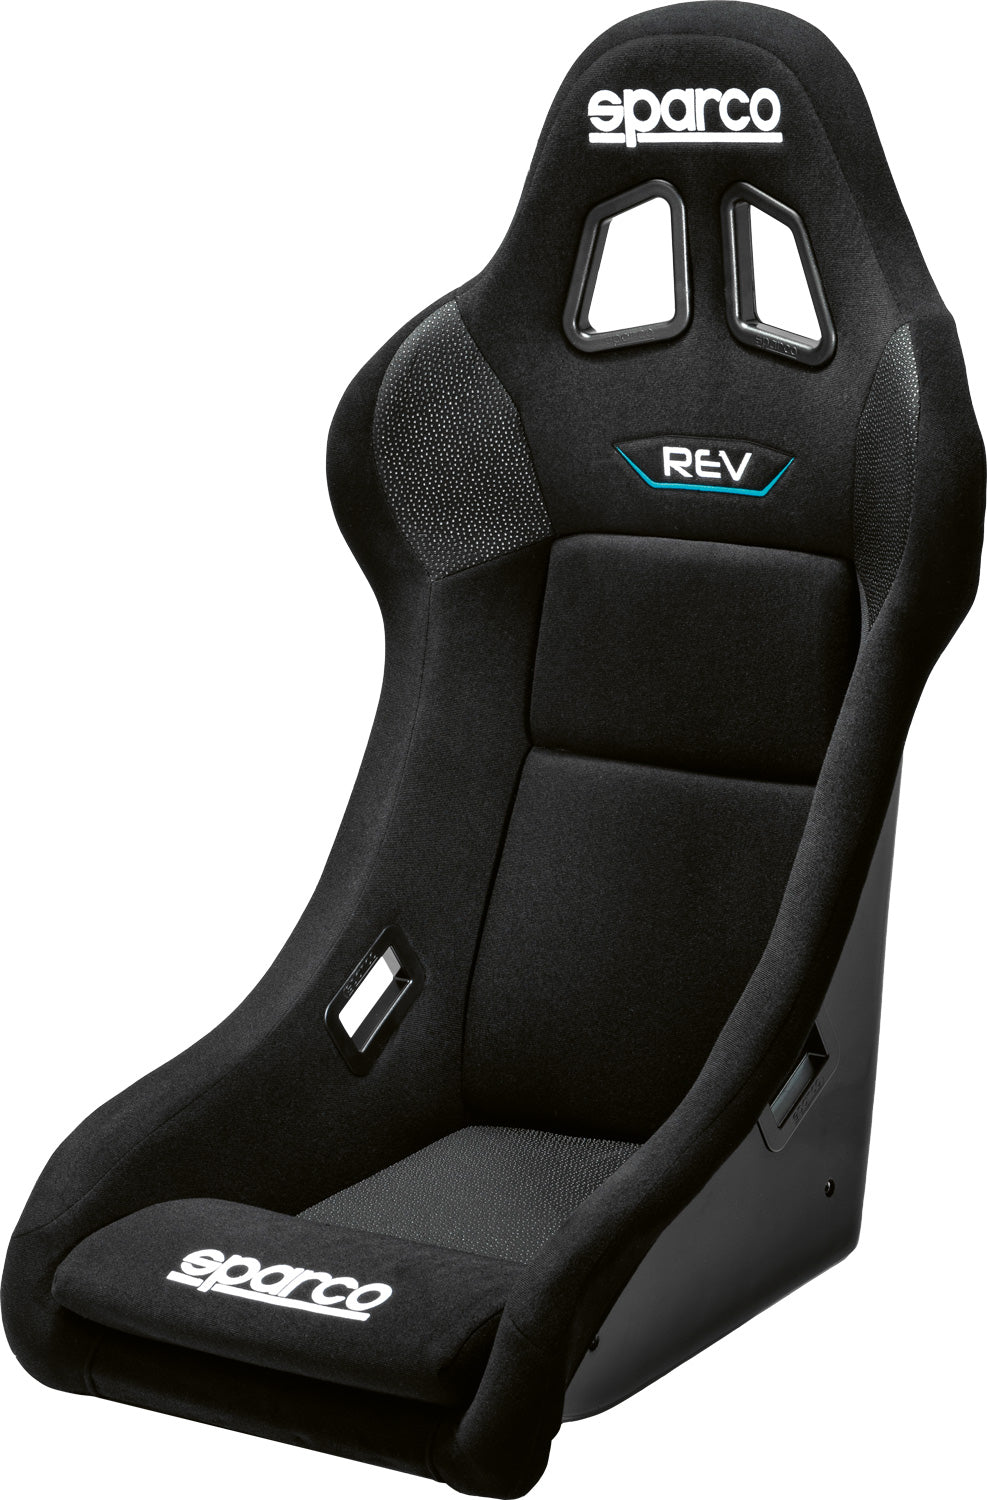 Sparco REV QRT racing seat